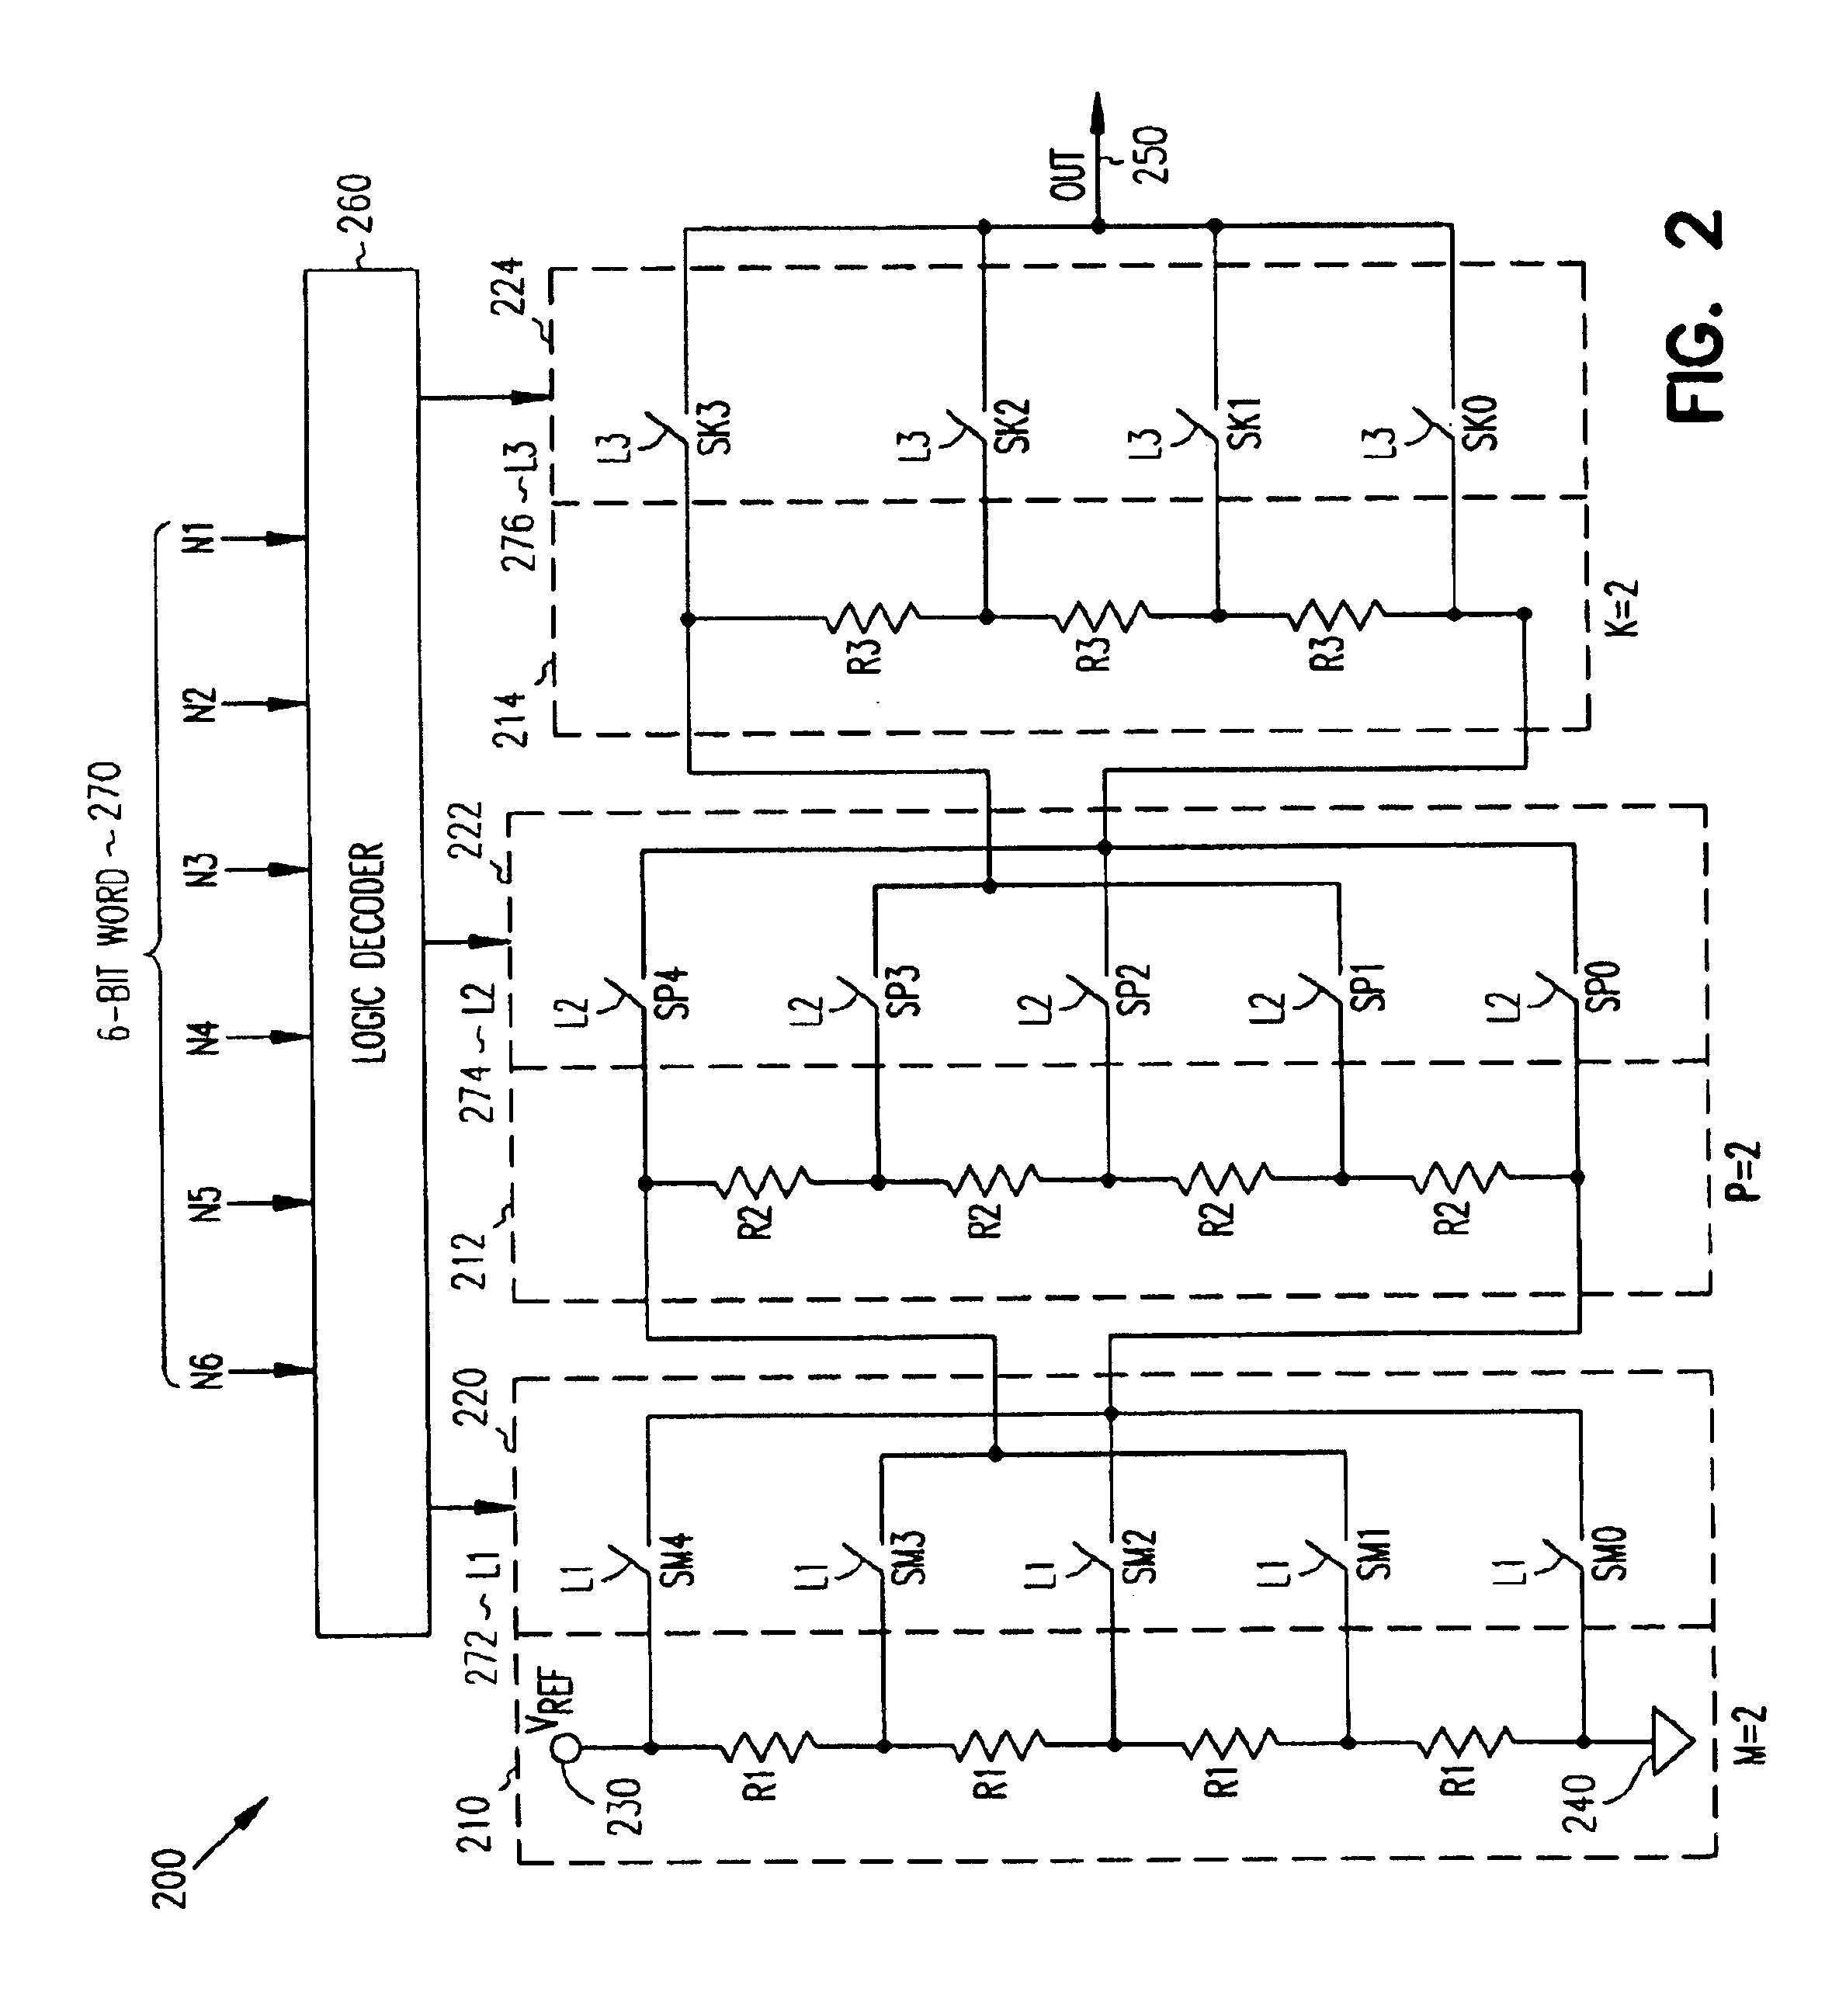 Triple resistor string DAC architecture